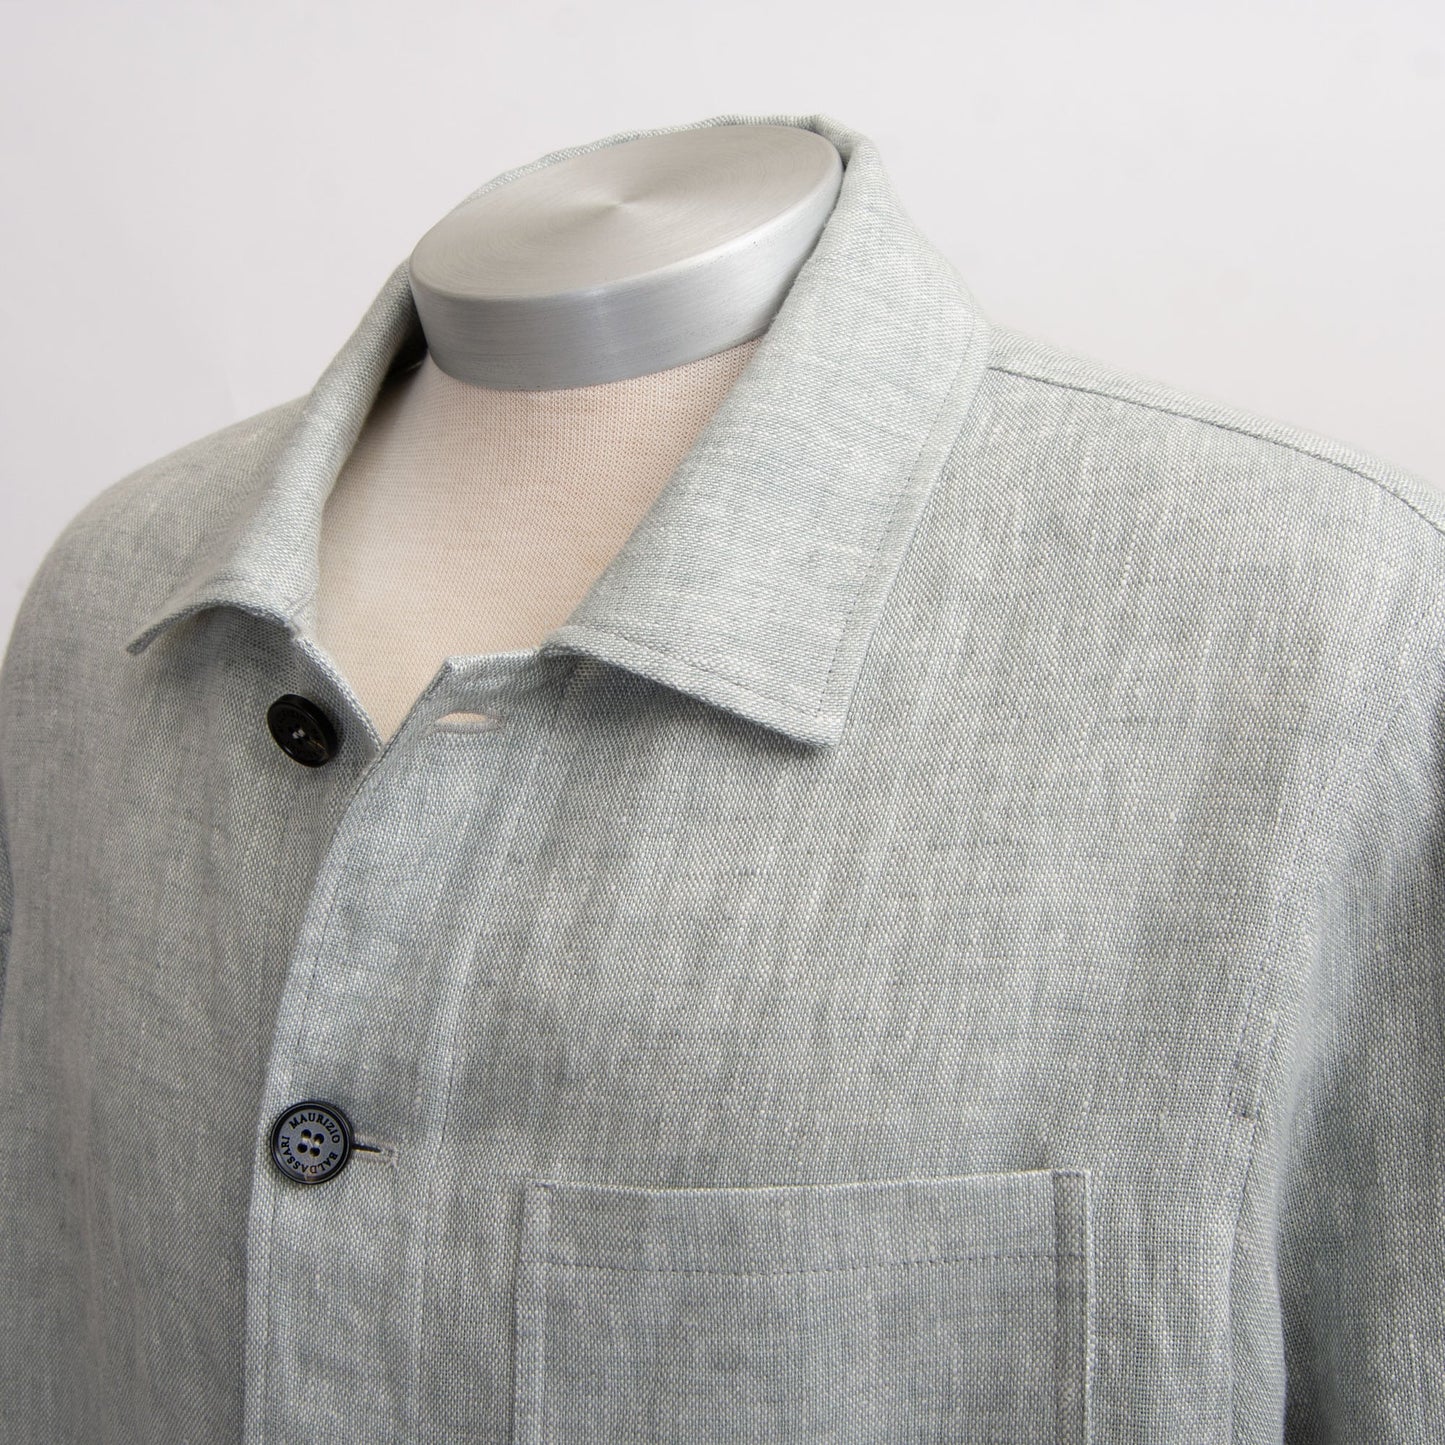 Maurizio Baldassari - Pure Linen Chore Jacket in Grey